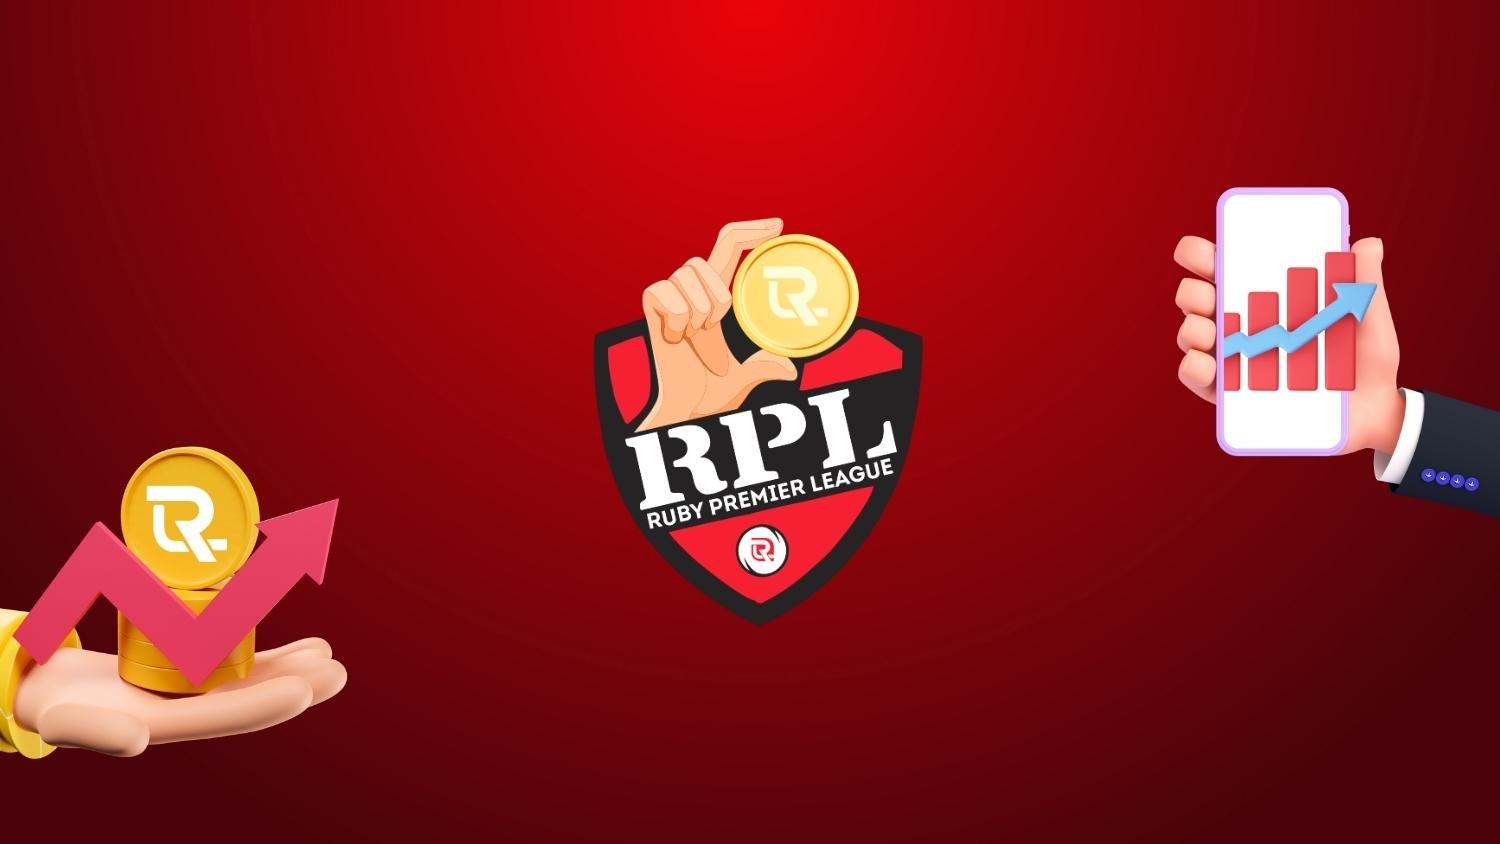 Ruby Asset-RPL Blog Image1